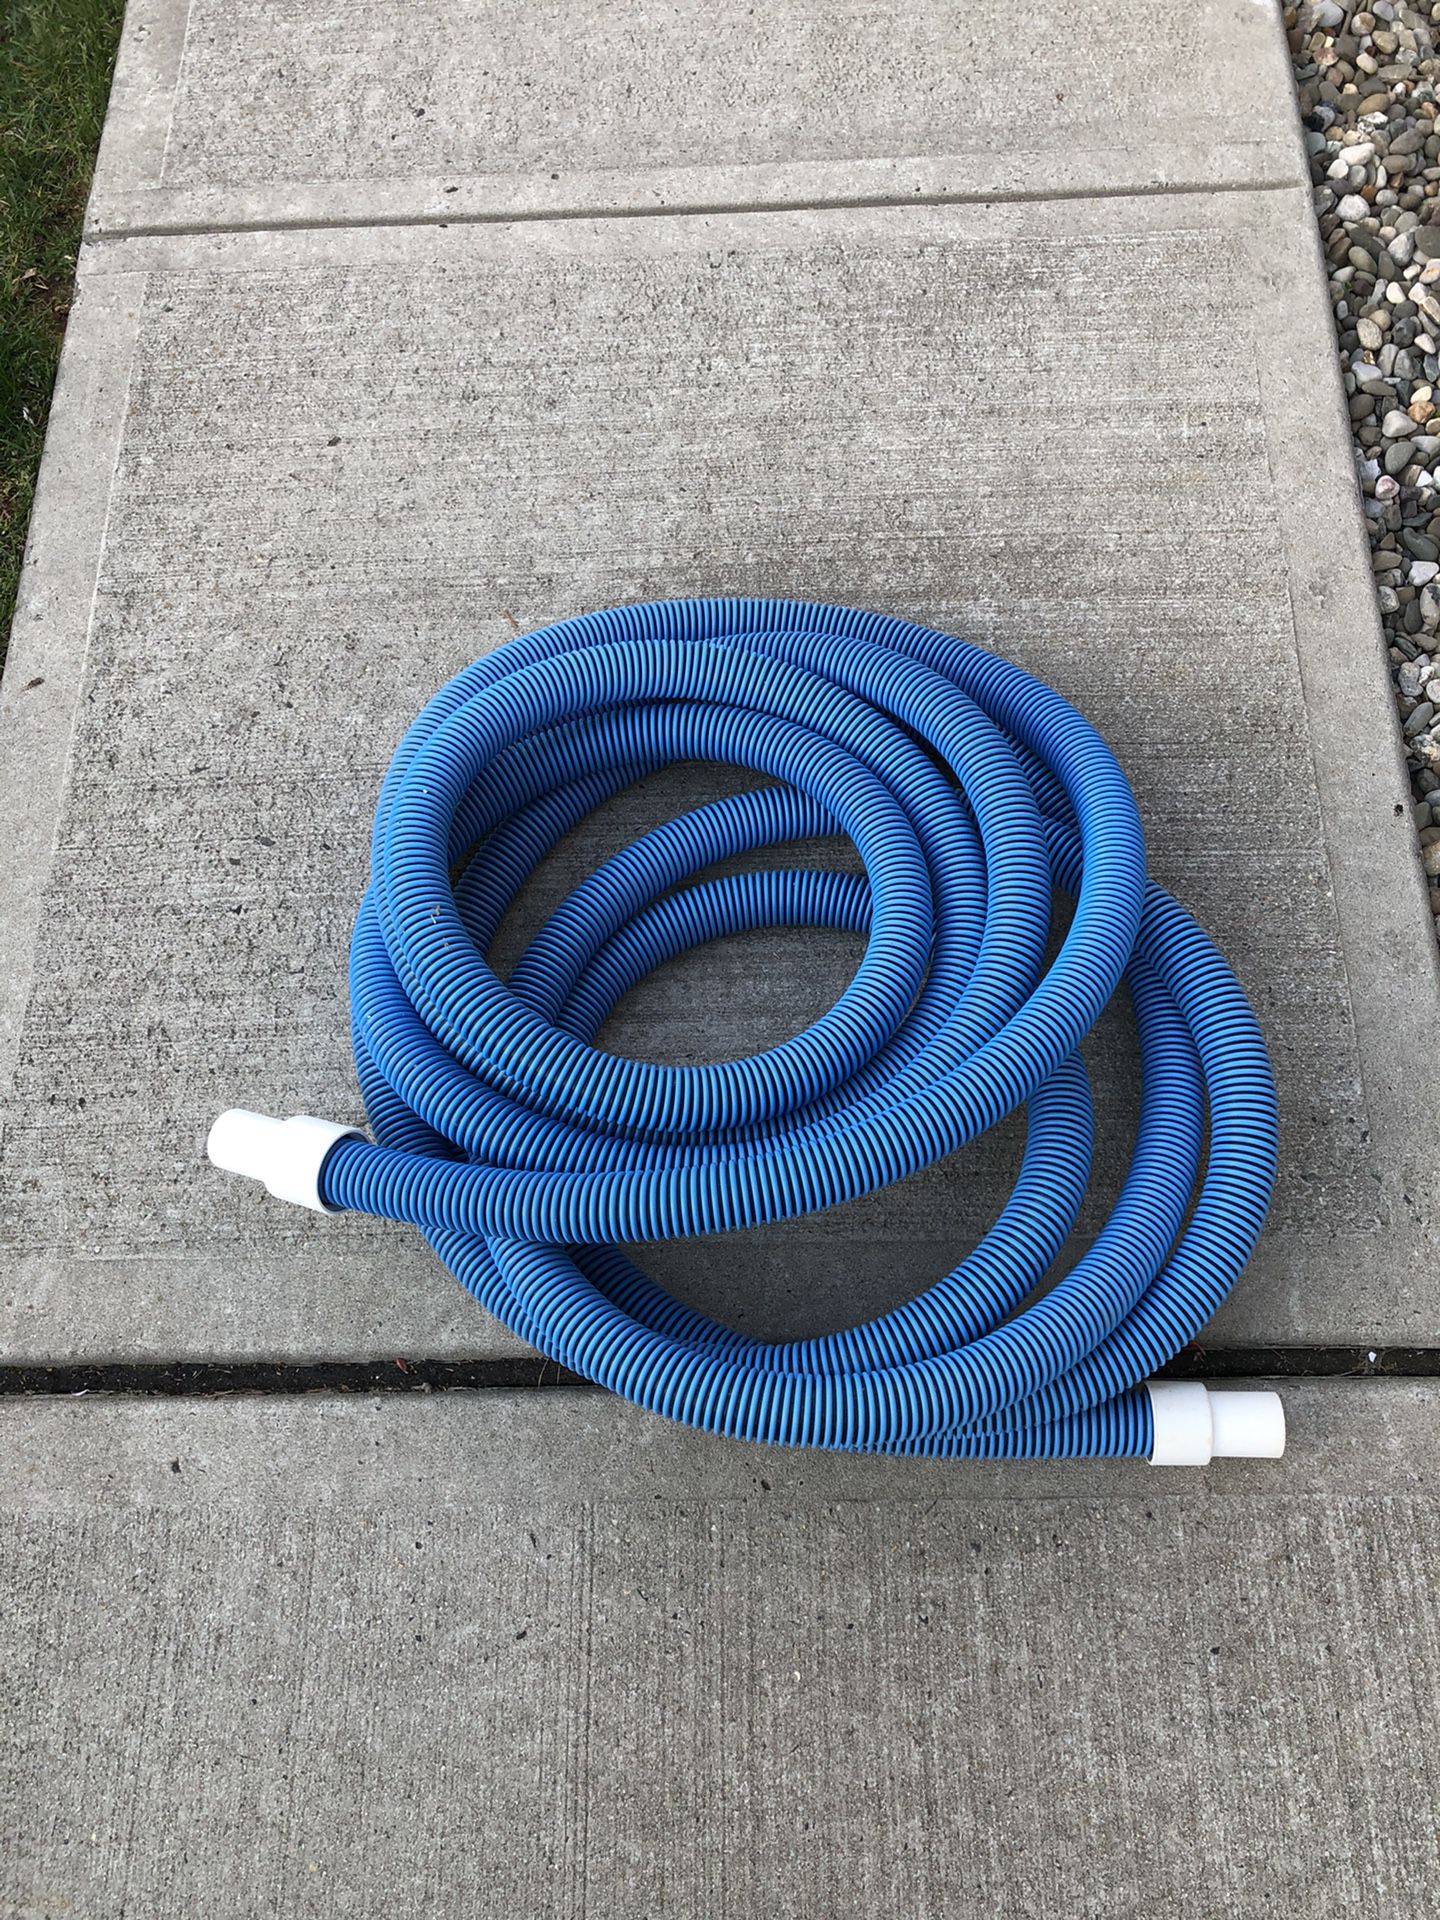 Pool hose 35ft - like new